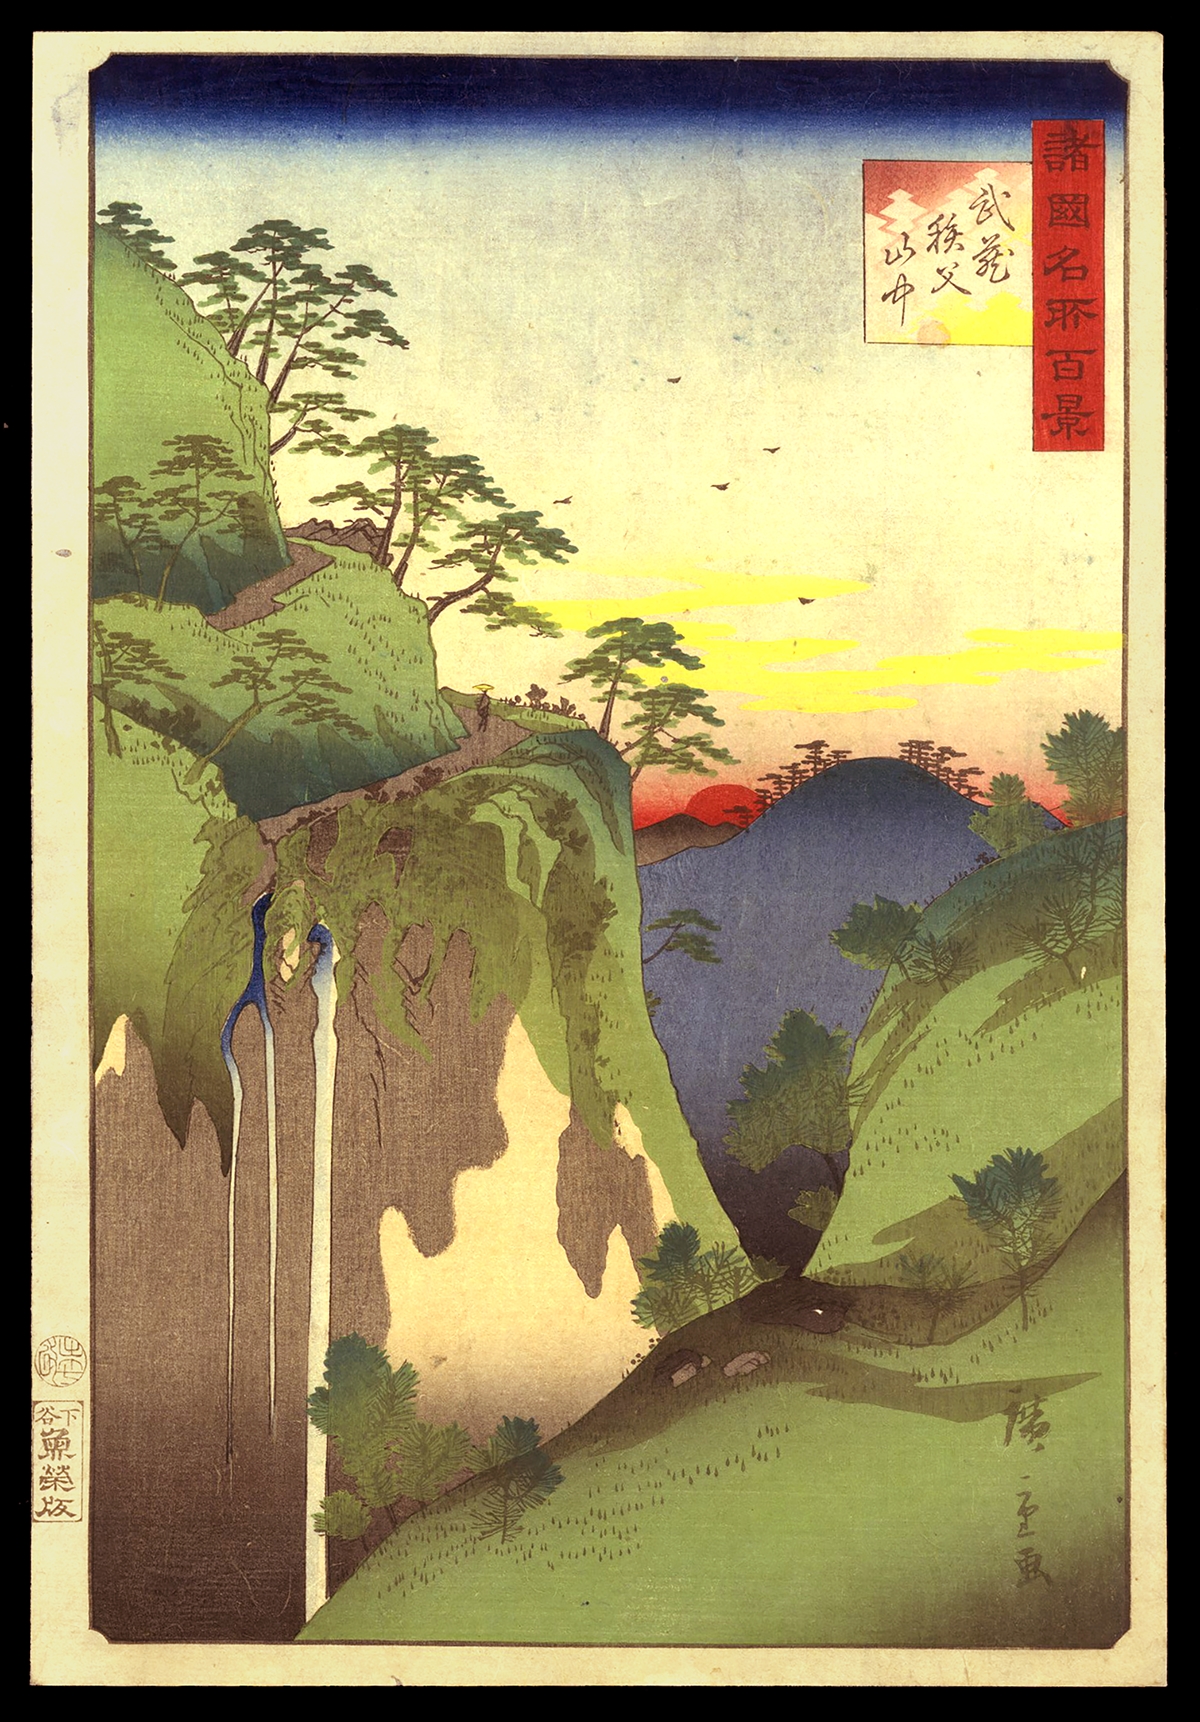 Artwork by Utagawa Hiroshige, Ando Hiroshige II - In the Chichibu Mountains in Musashi Province, Made of woodblock